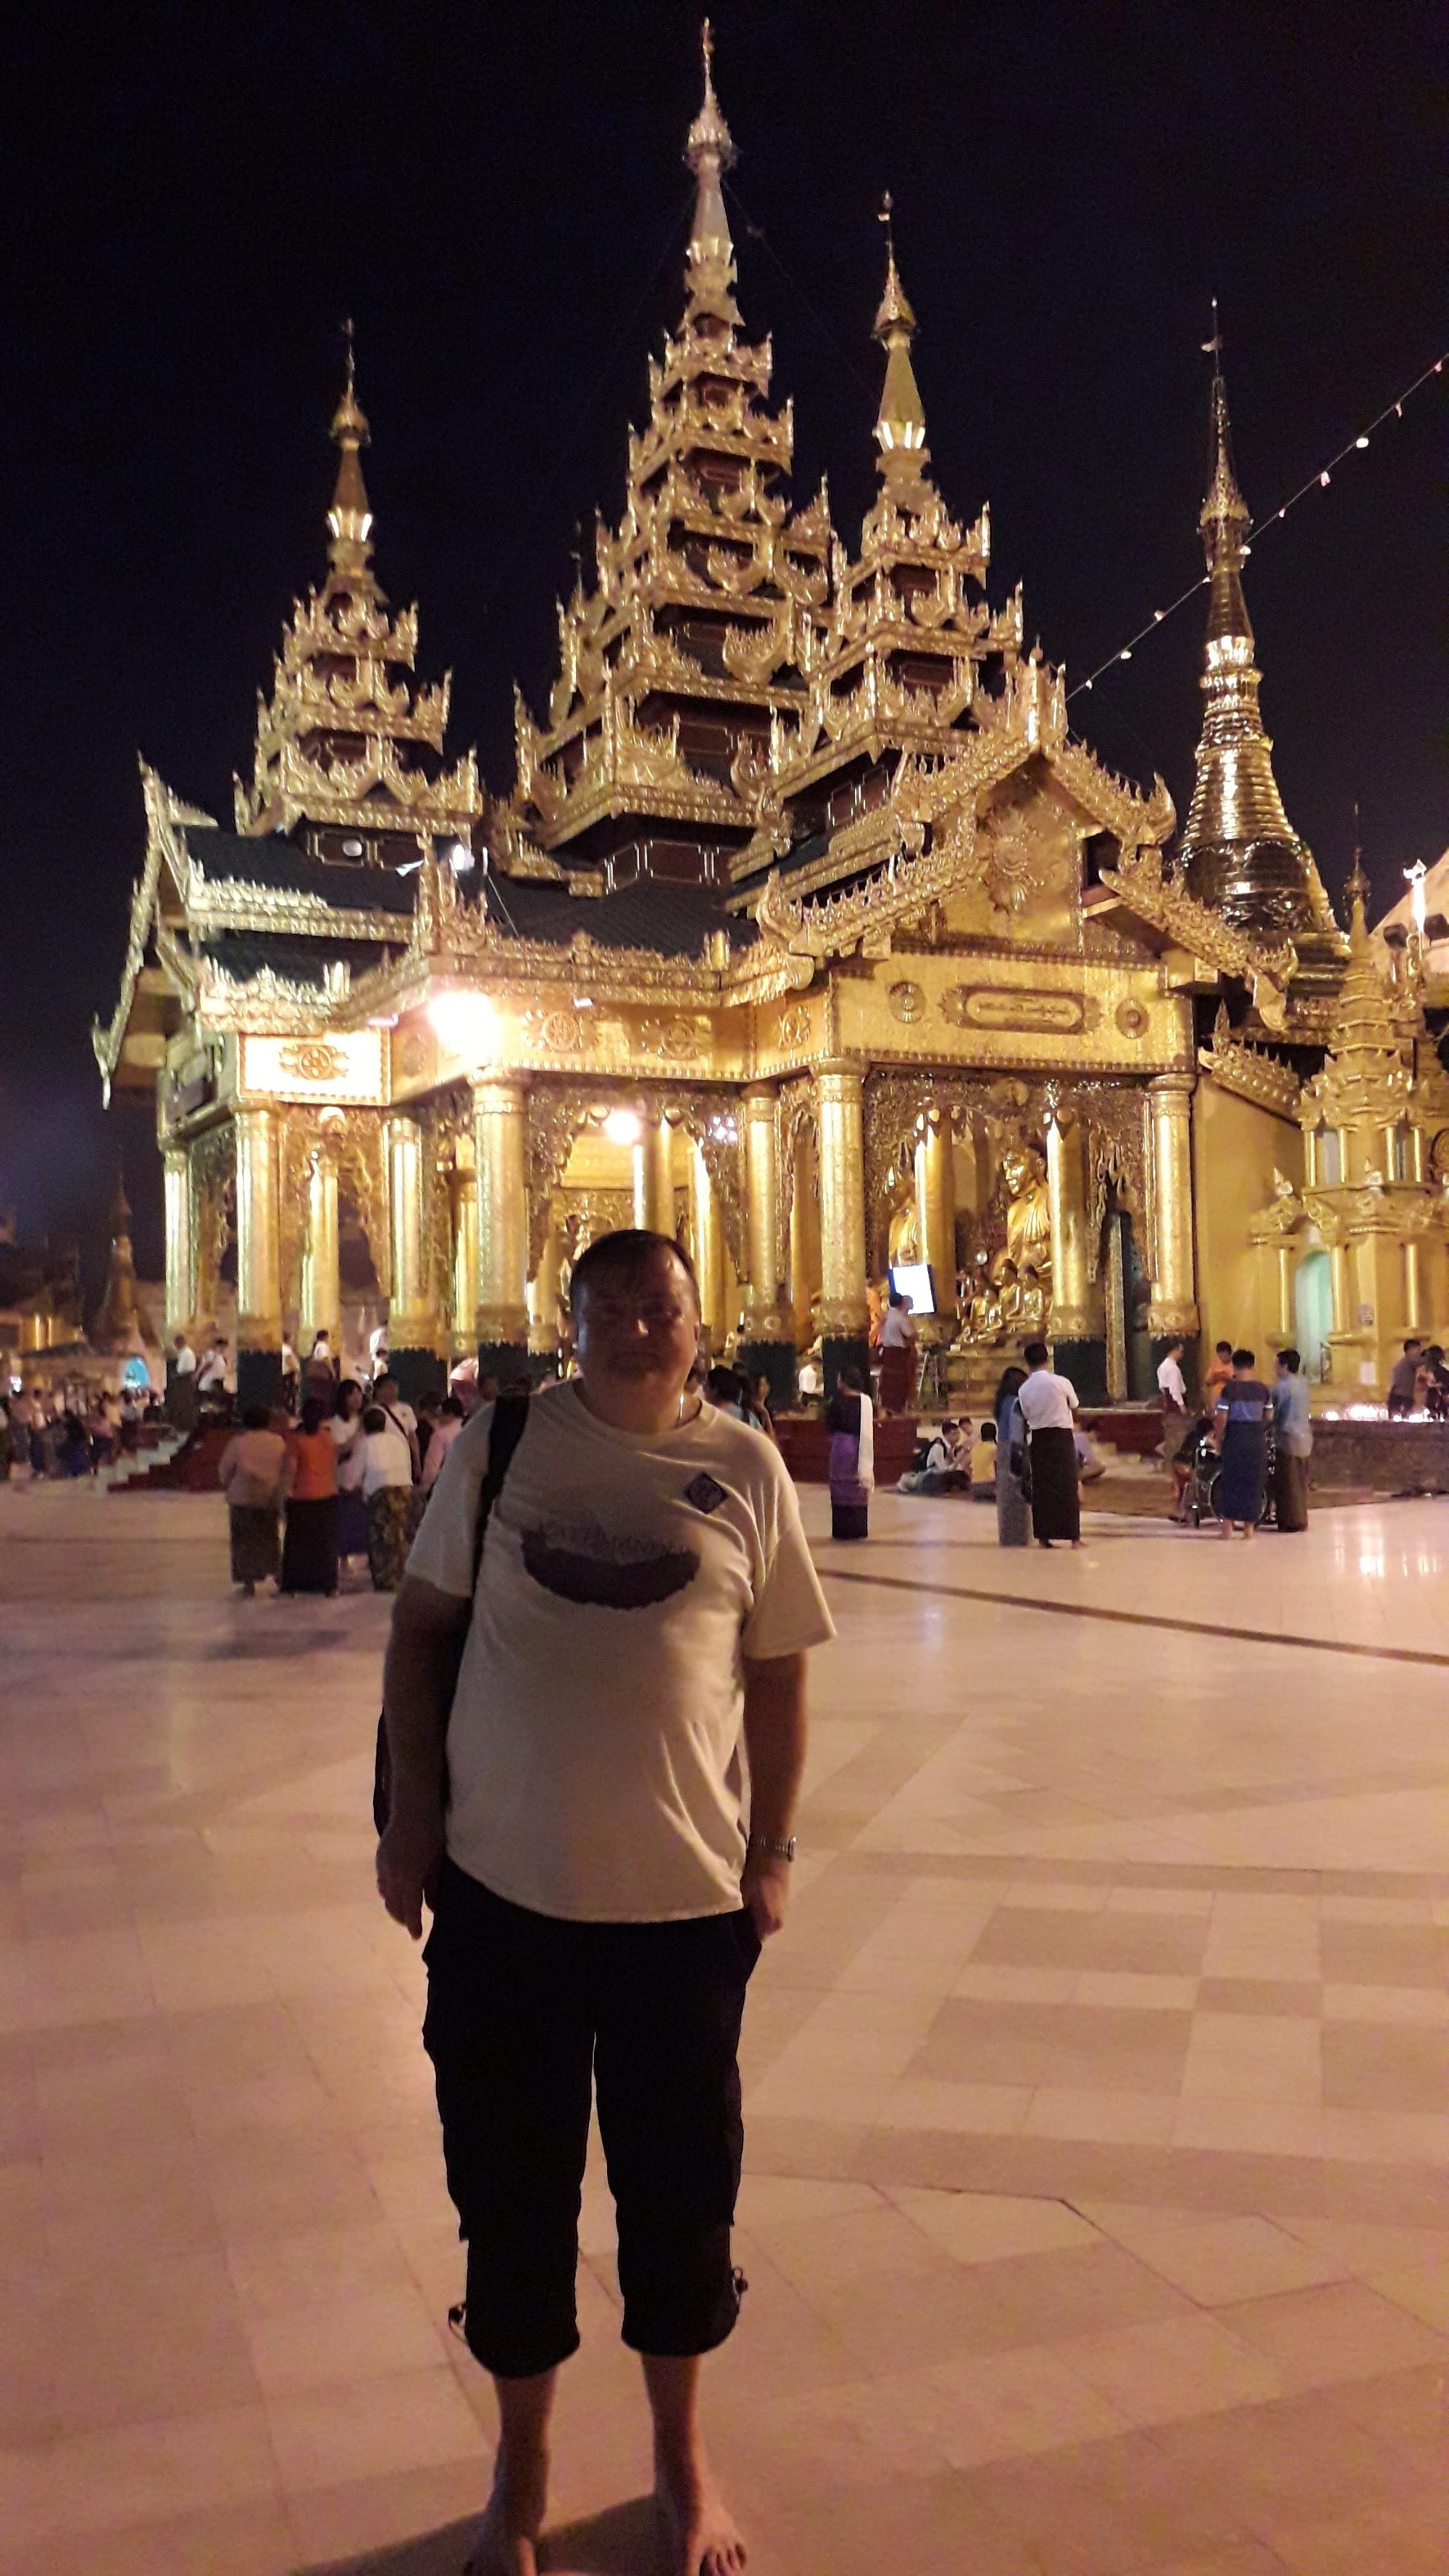 At the Shwedagon Pagoda complex Yangon at night